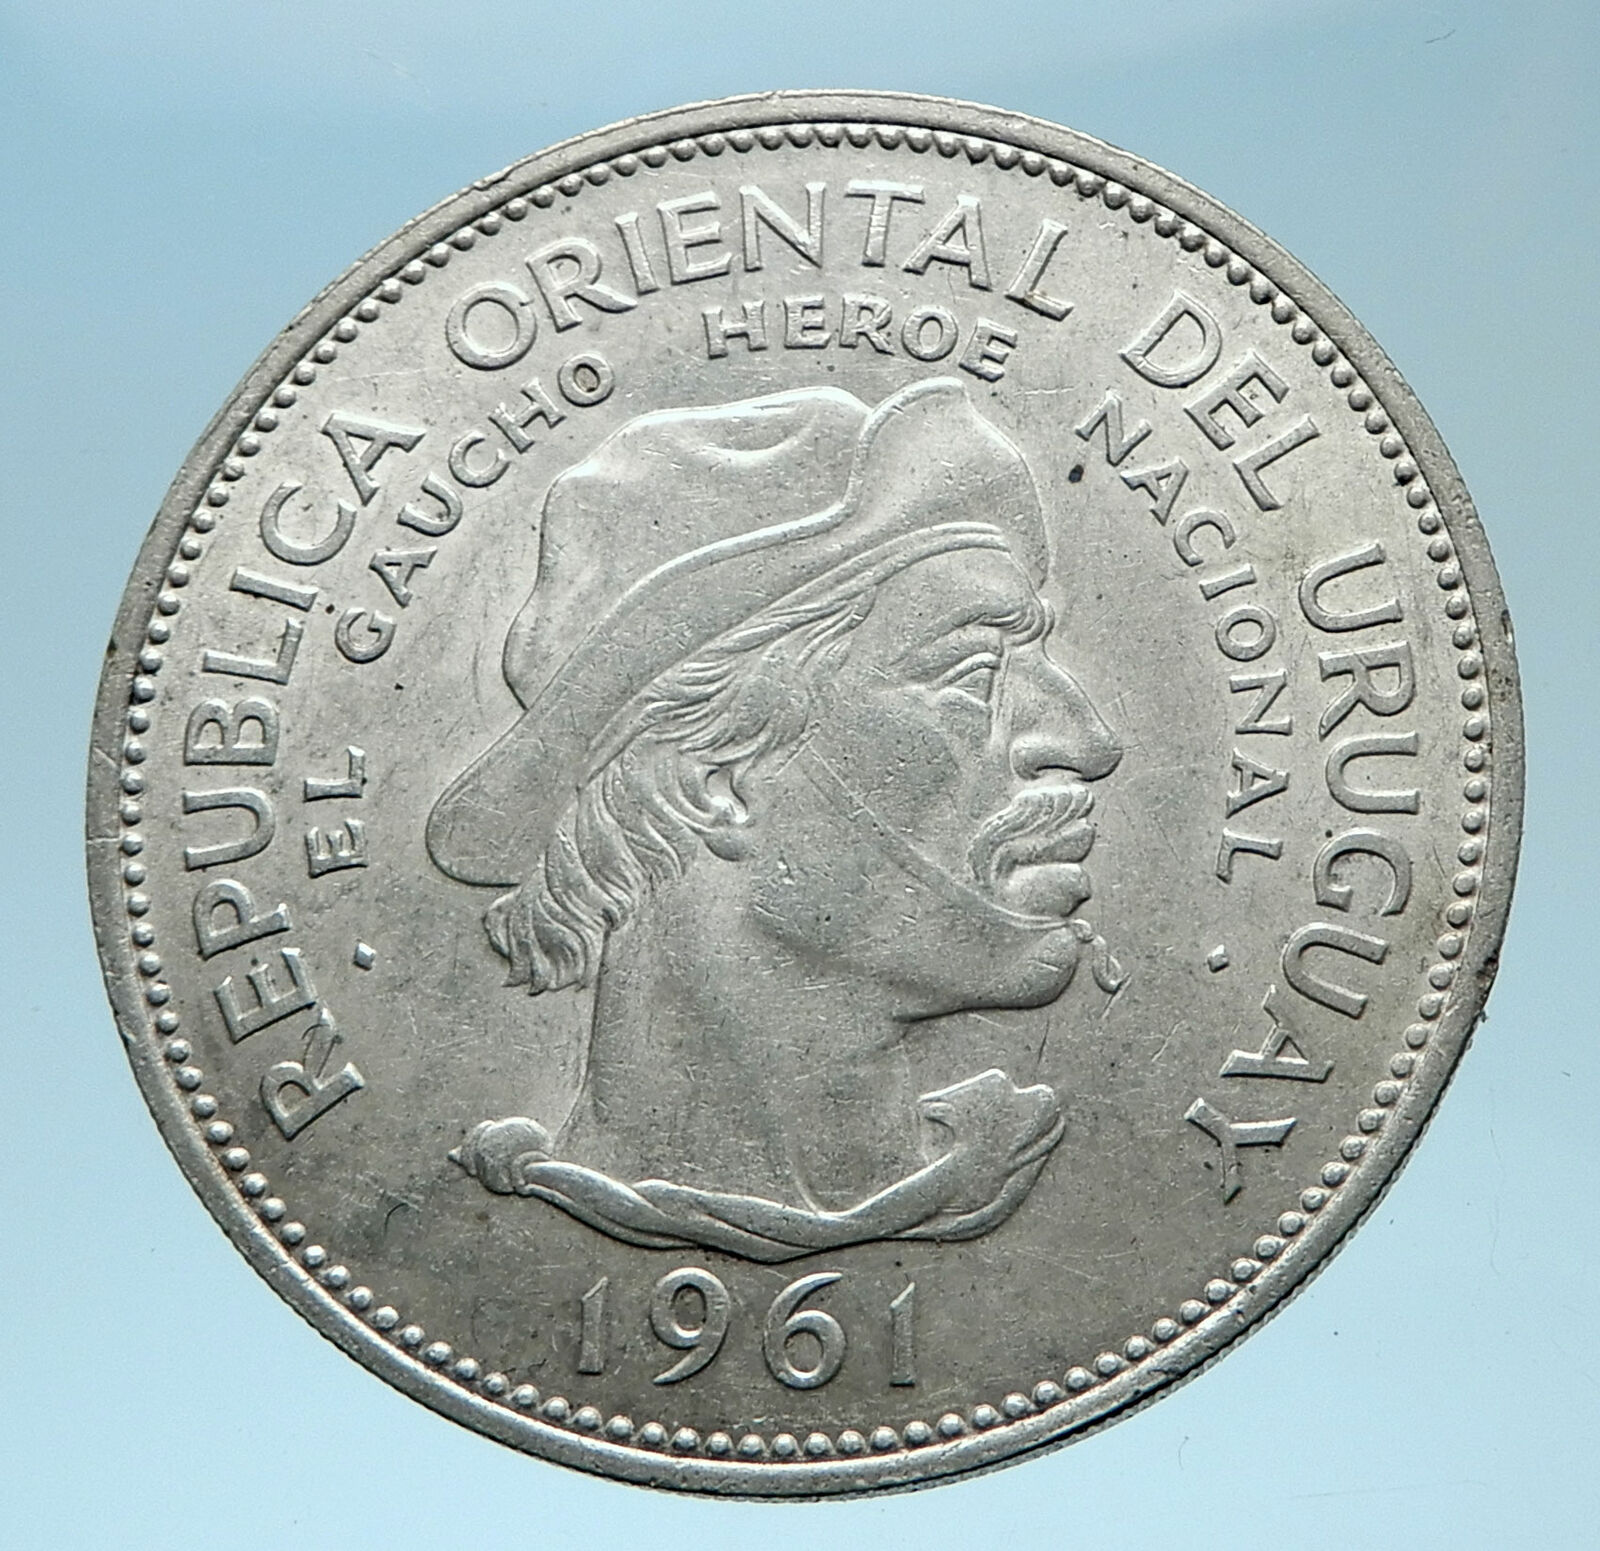 1961 URUGUAY w El Caucho Hero Against Spain Genuine Silver 10 Pesos Coin i77949